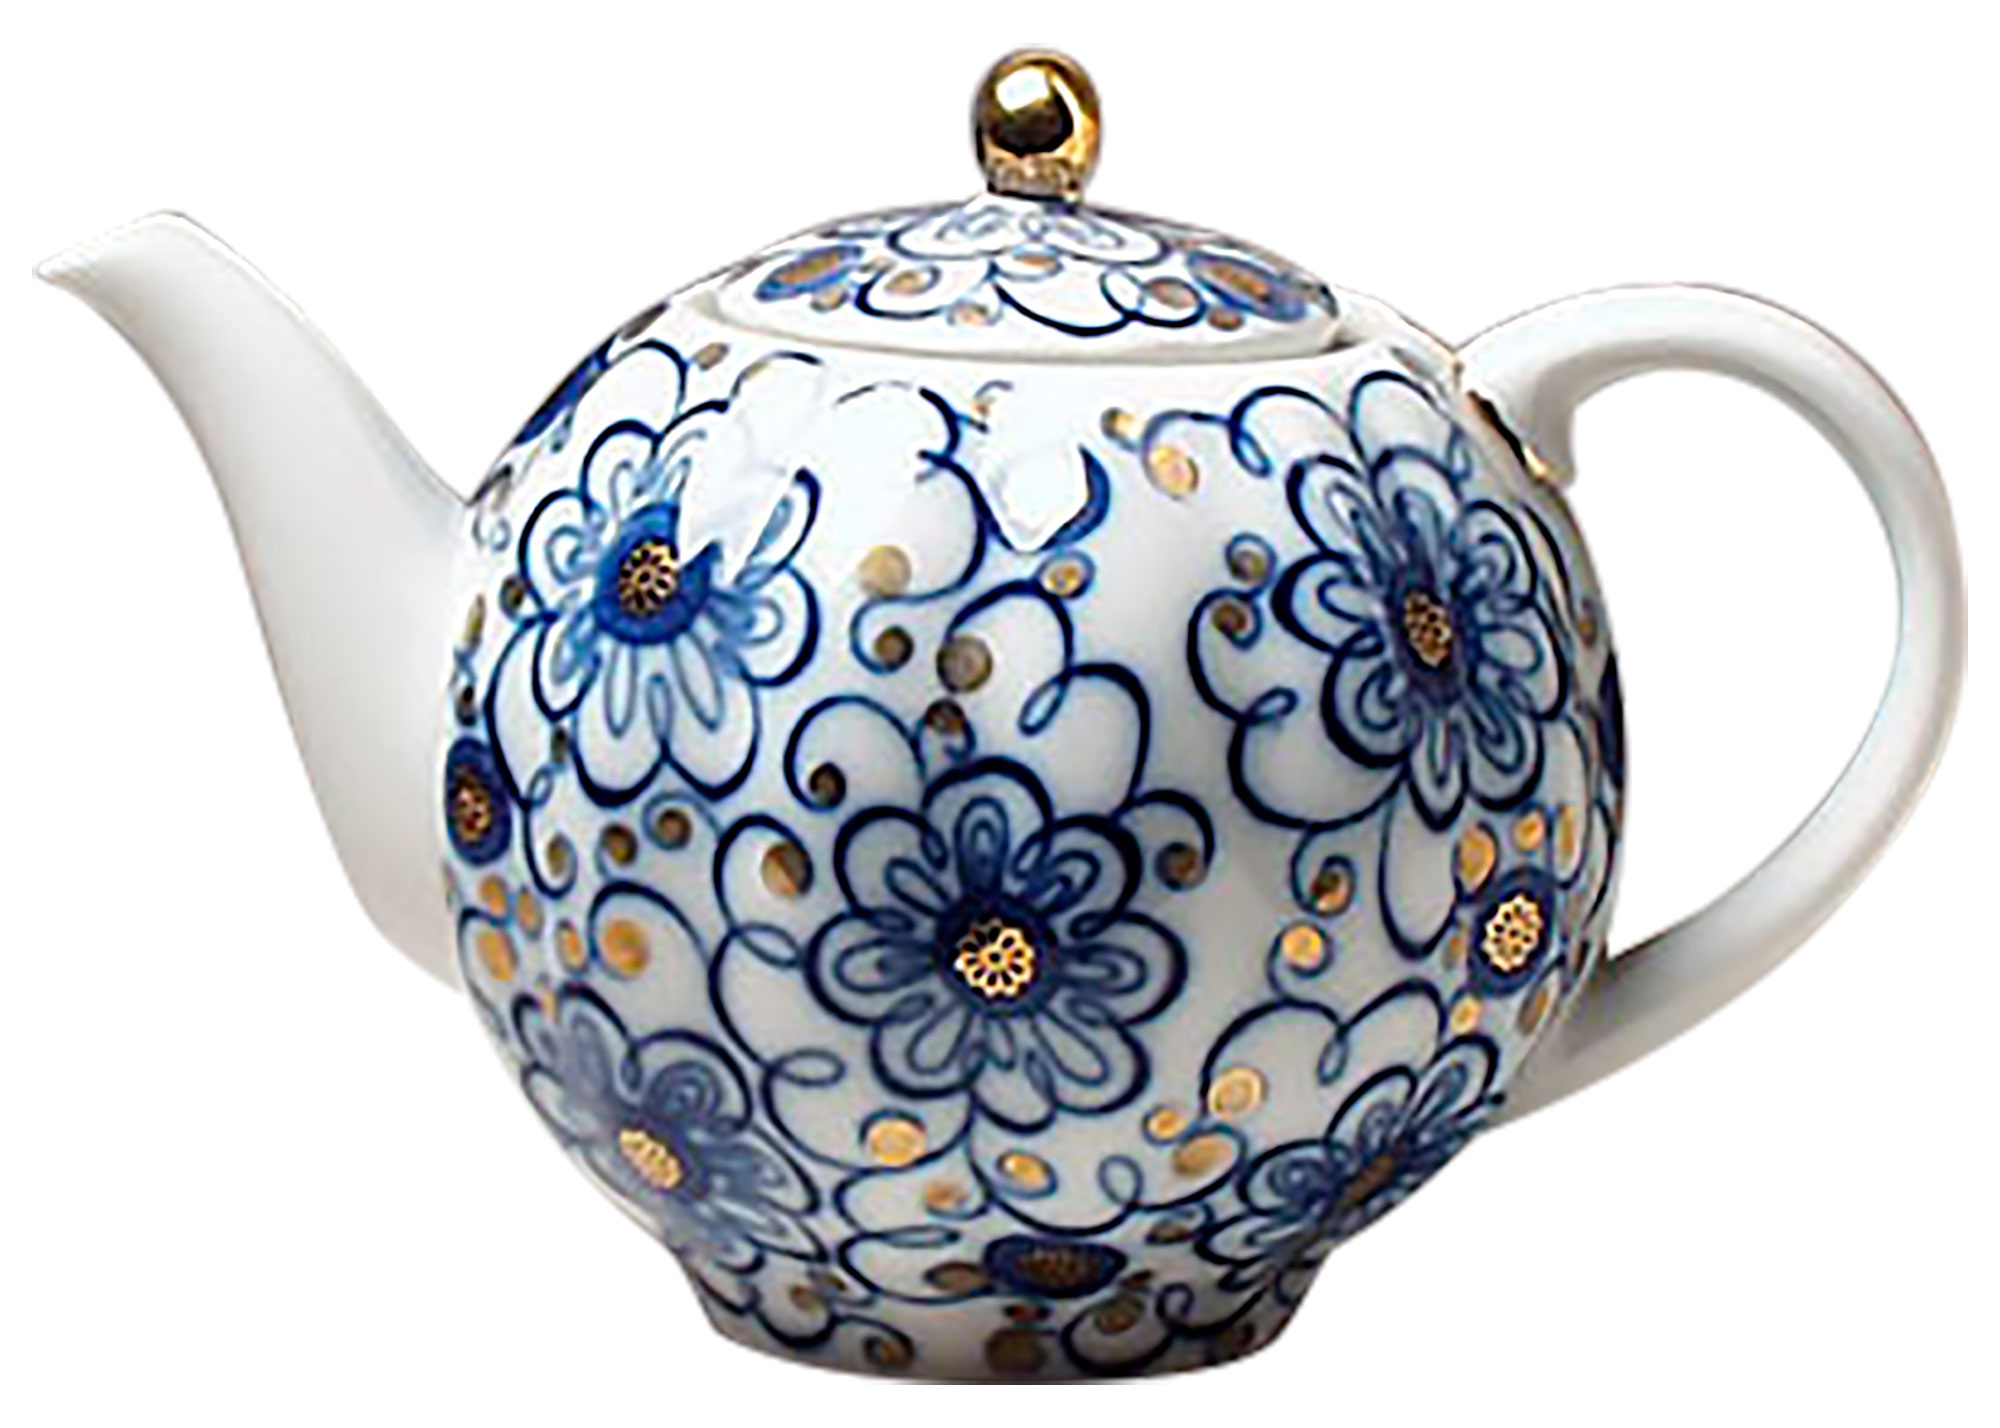 Buy Winding Twig Teapot 5.5" at GoldenCockerel.com